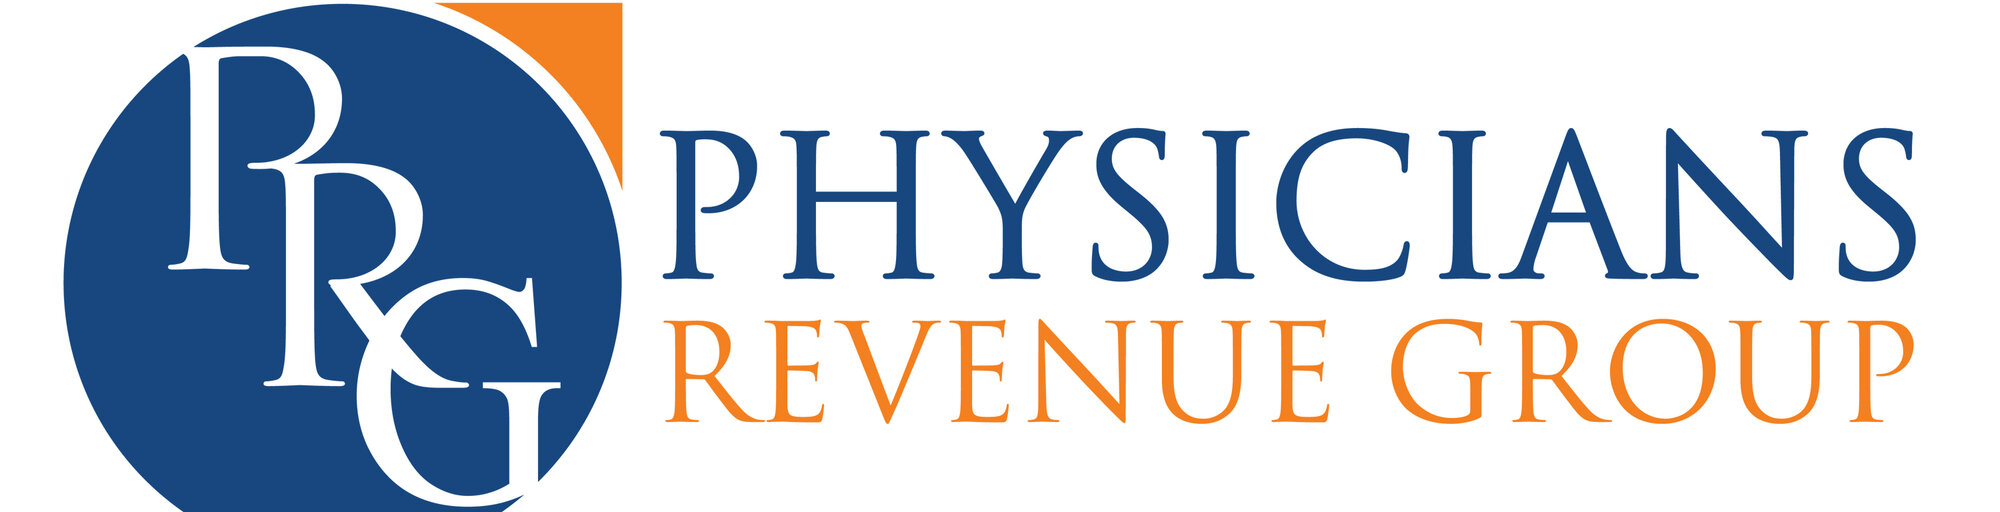 physiciansrevenuegroup's background image'